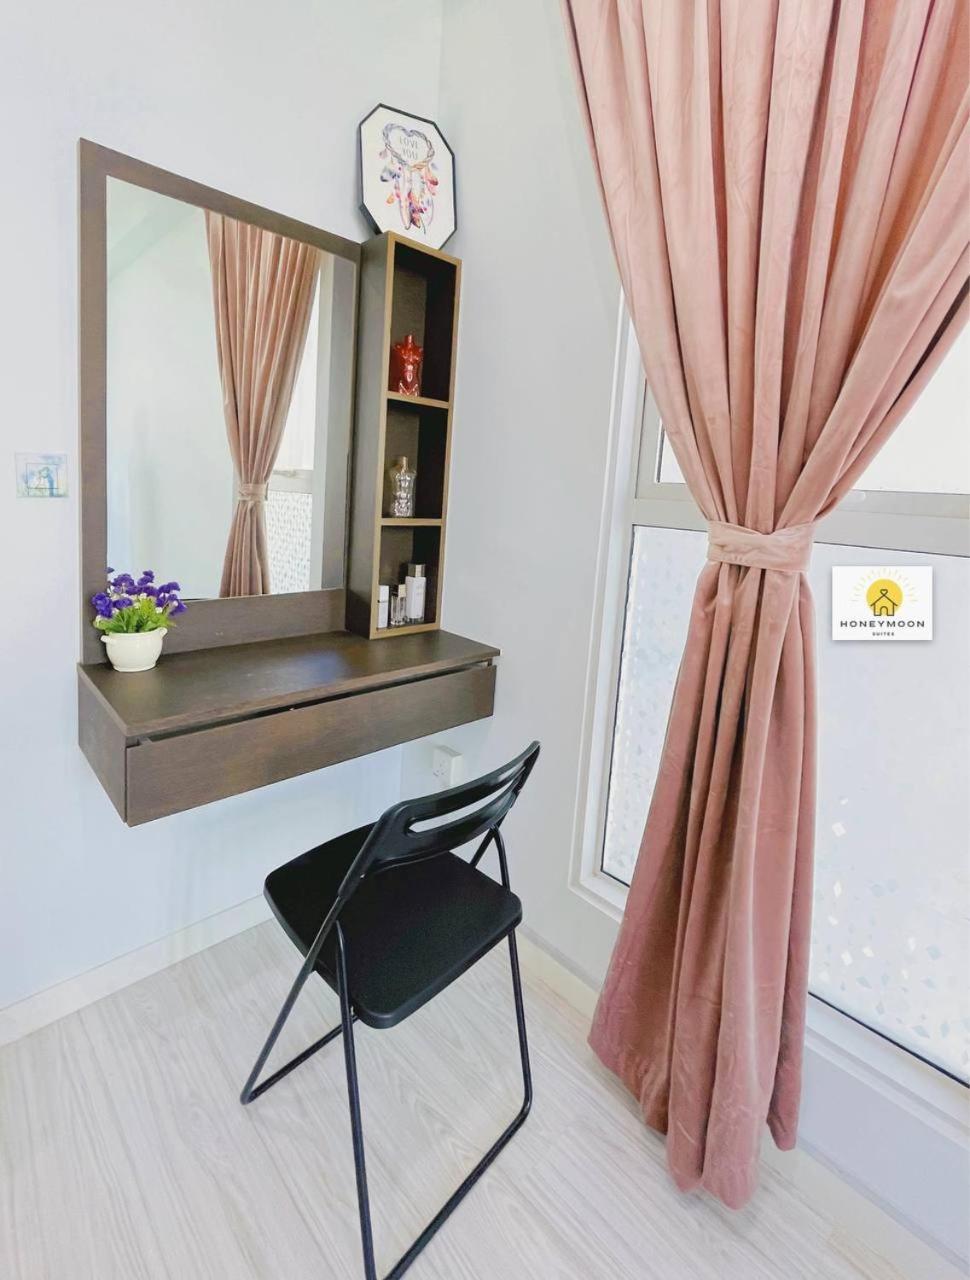 Honeymoon Suites @ Sutera Avenue Kota Kinabalu Sabah Malaysia 外观 照片